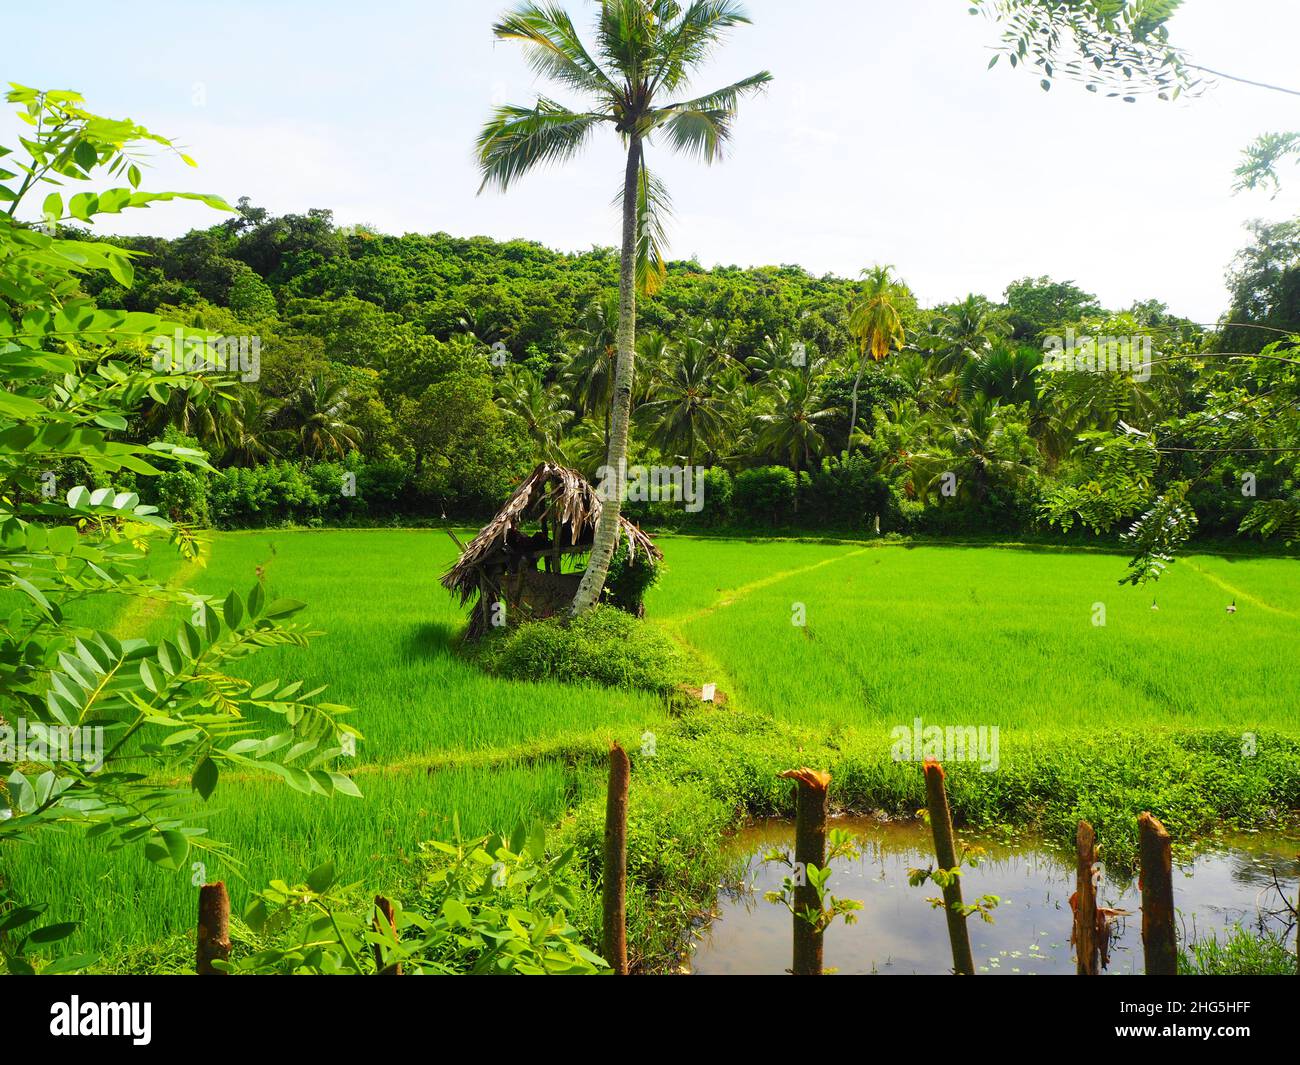 Travel Asia, Rice Fields in South East Asia #Asia #aroundtheworld #SriLanka #wanderlust #hinterland #authentic #fernweh #slowtravel #loveasia Stock Photo